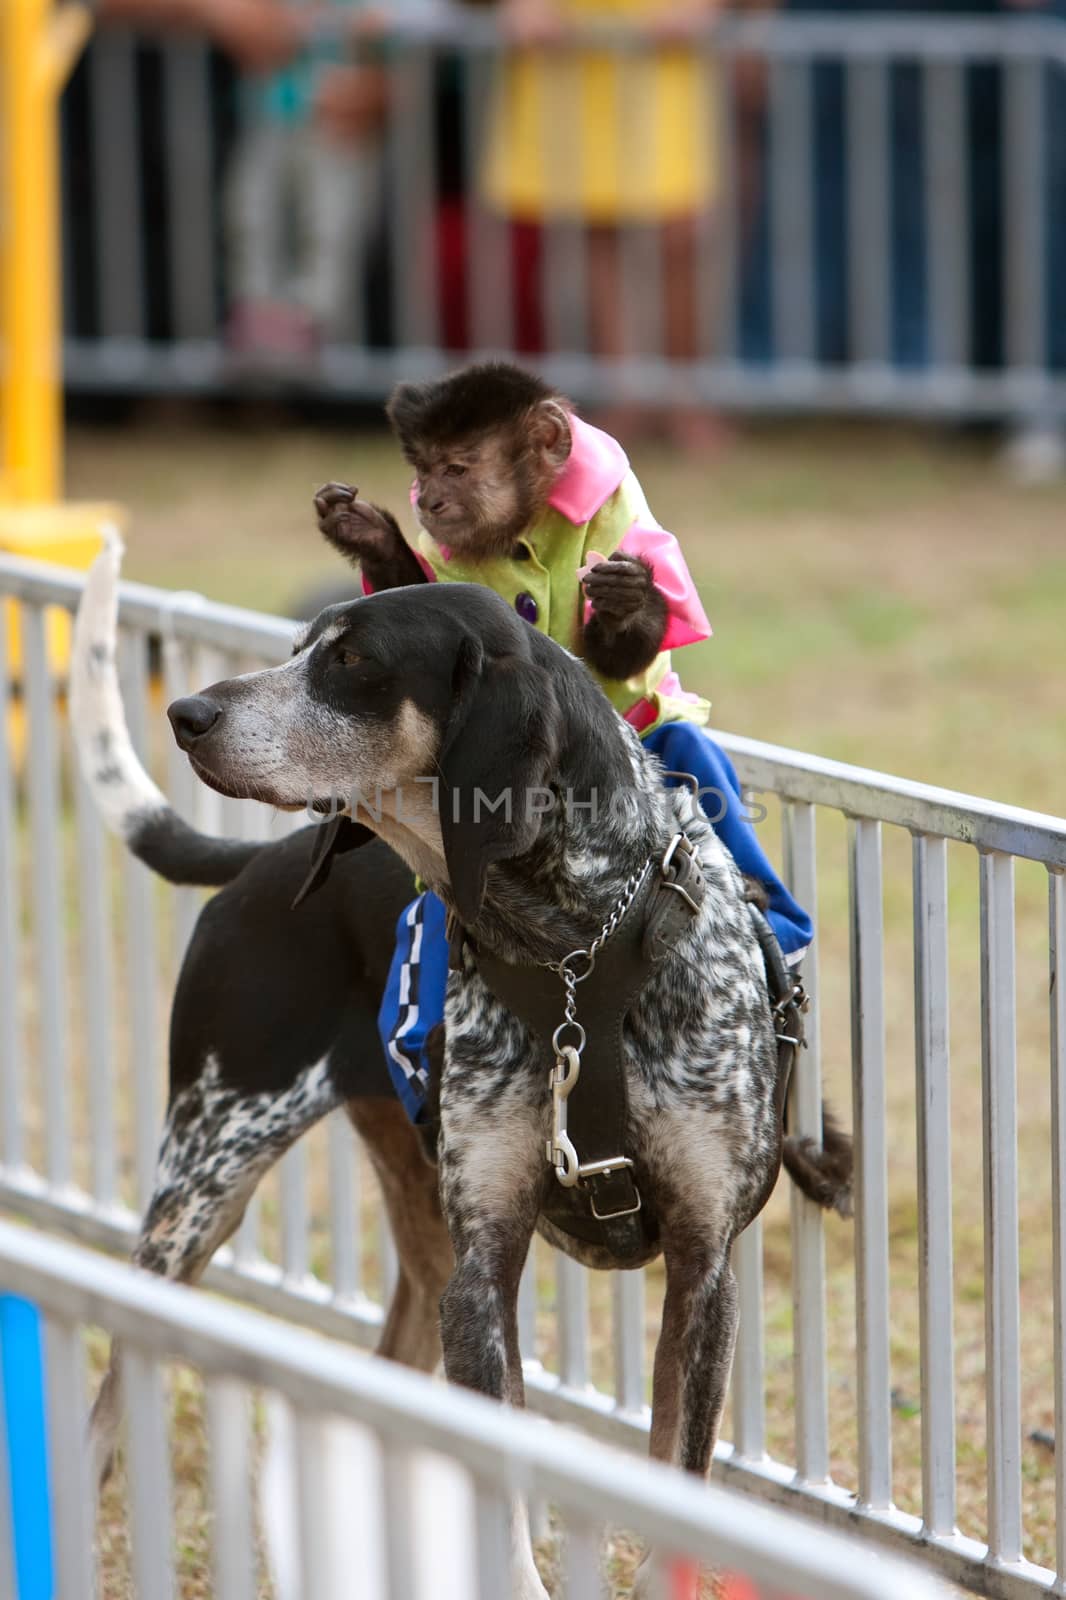 Hampton, GA, USA - September 27, 2014:  A costumed organ grinder monkey rides a dog at the Georgia State Fair in Hampton.